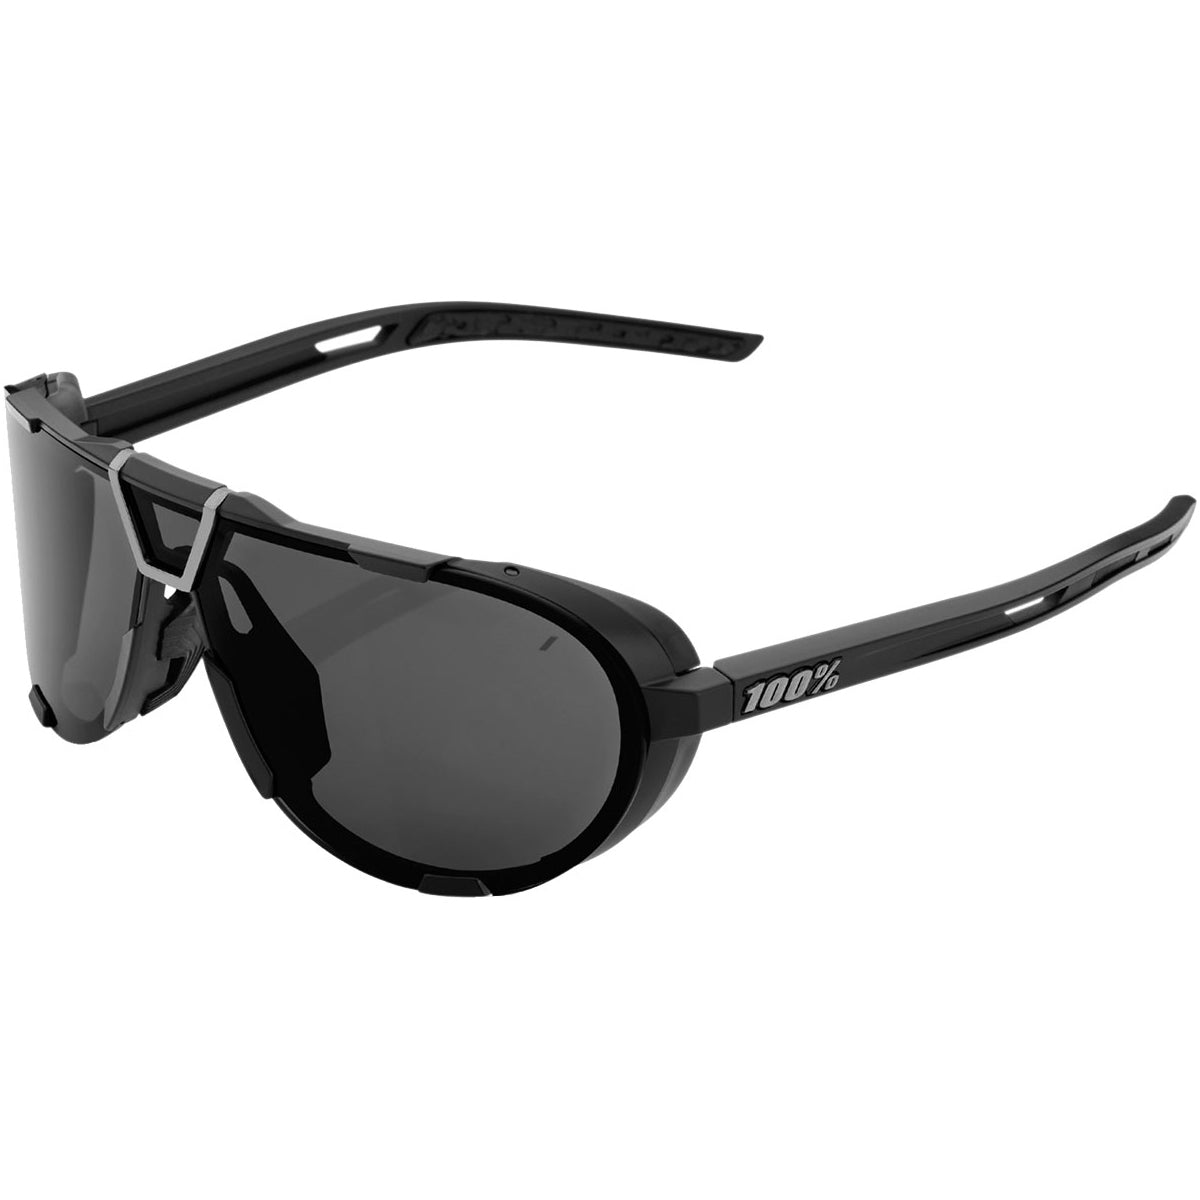 100 Percent Westcraft Sunglasses - Matte Black - Smoke Lens